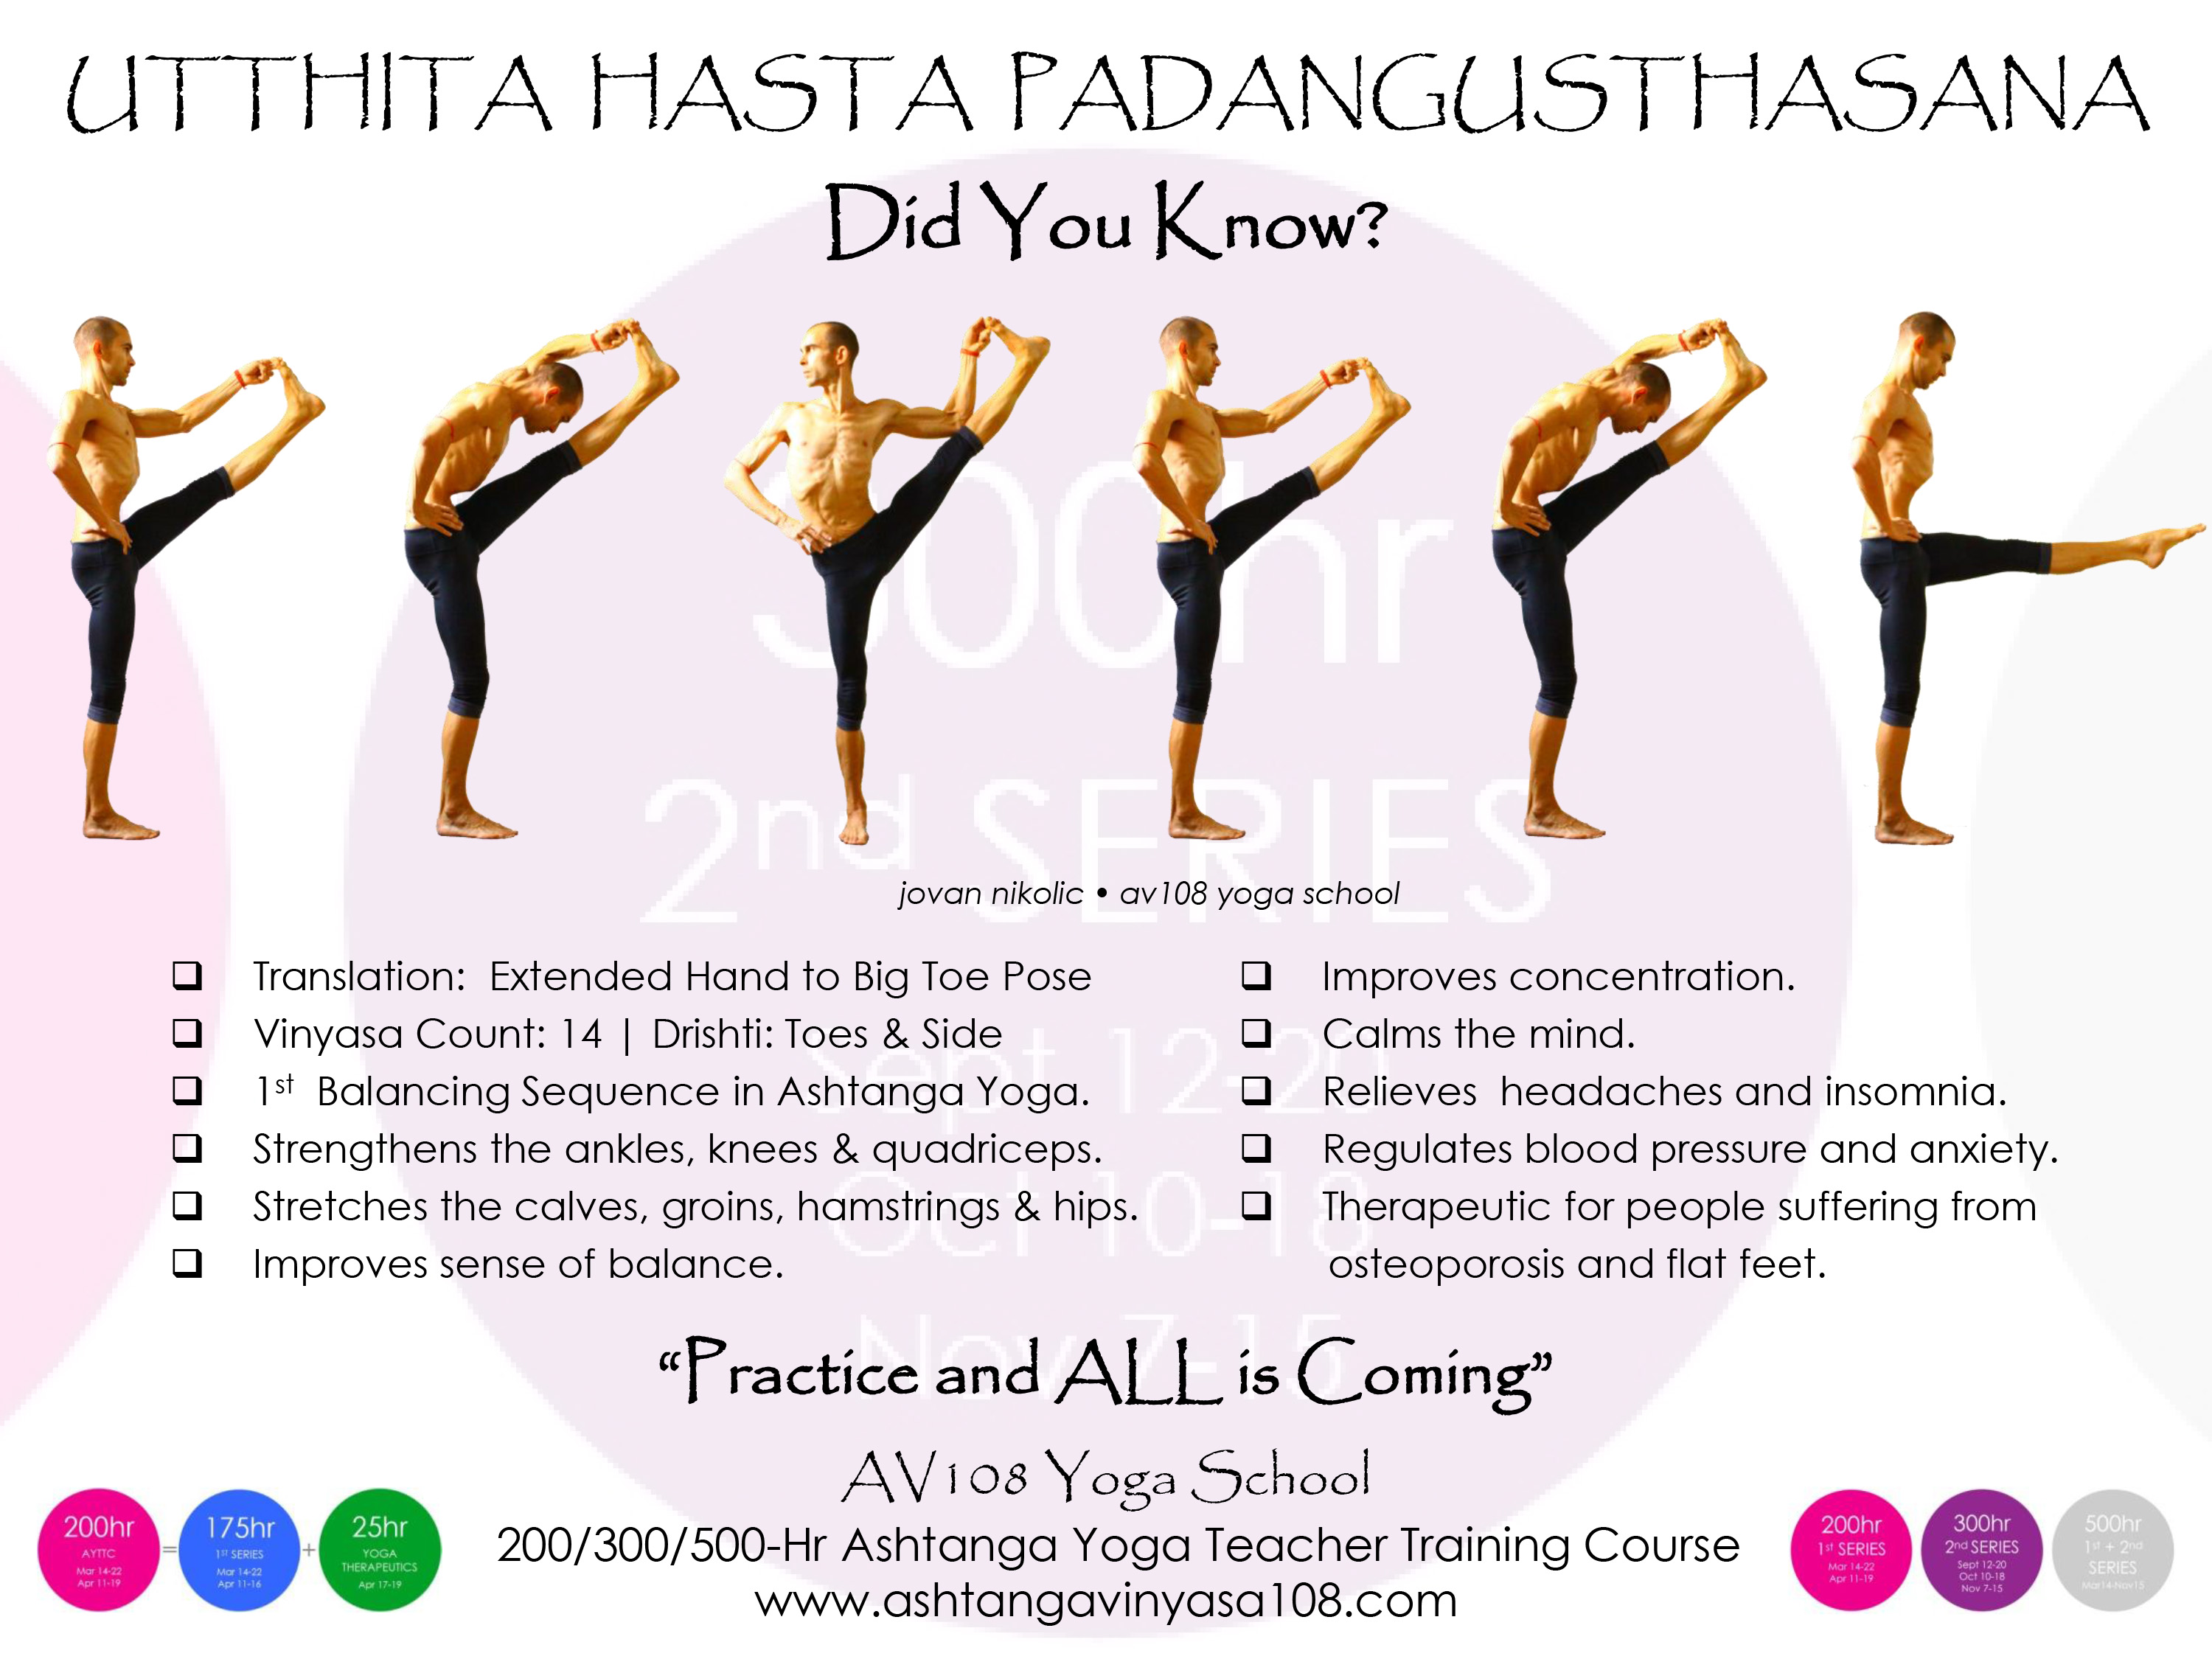 Ashtanga Vinyasa Yoga Teacher Training Course, Manila, Philippines